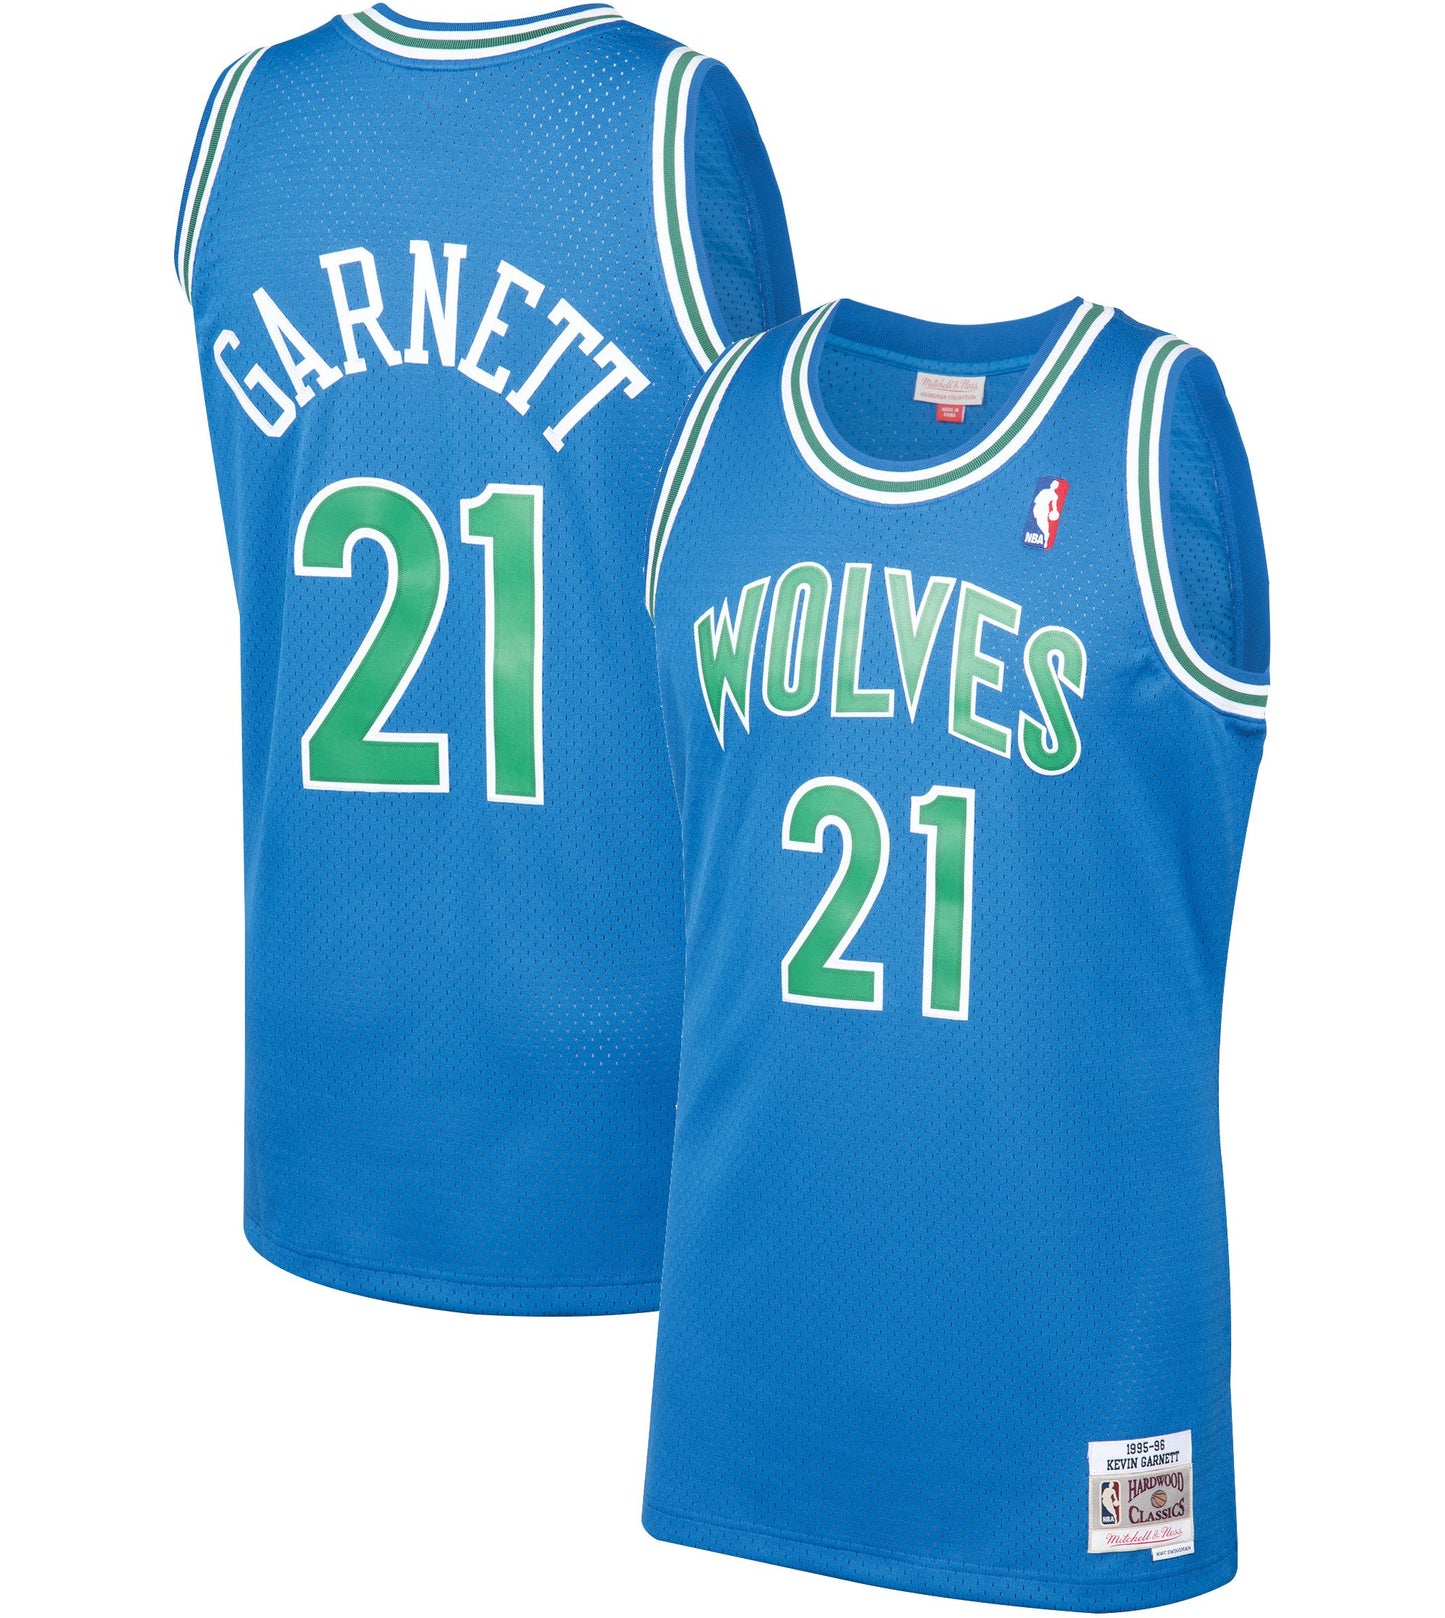 Minnesota Timberwolves Green NBA Jerseys for sale